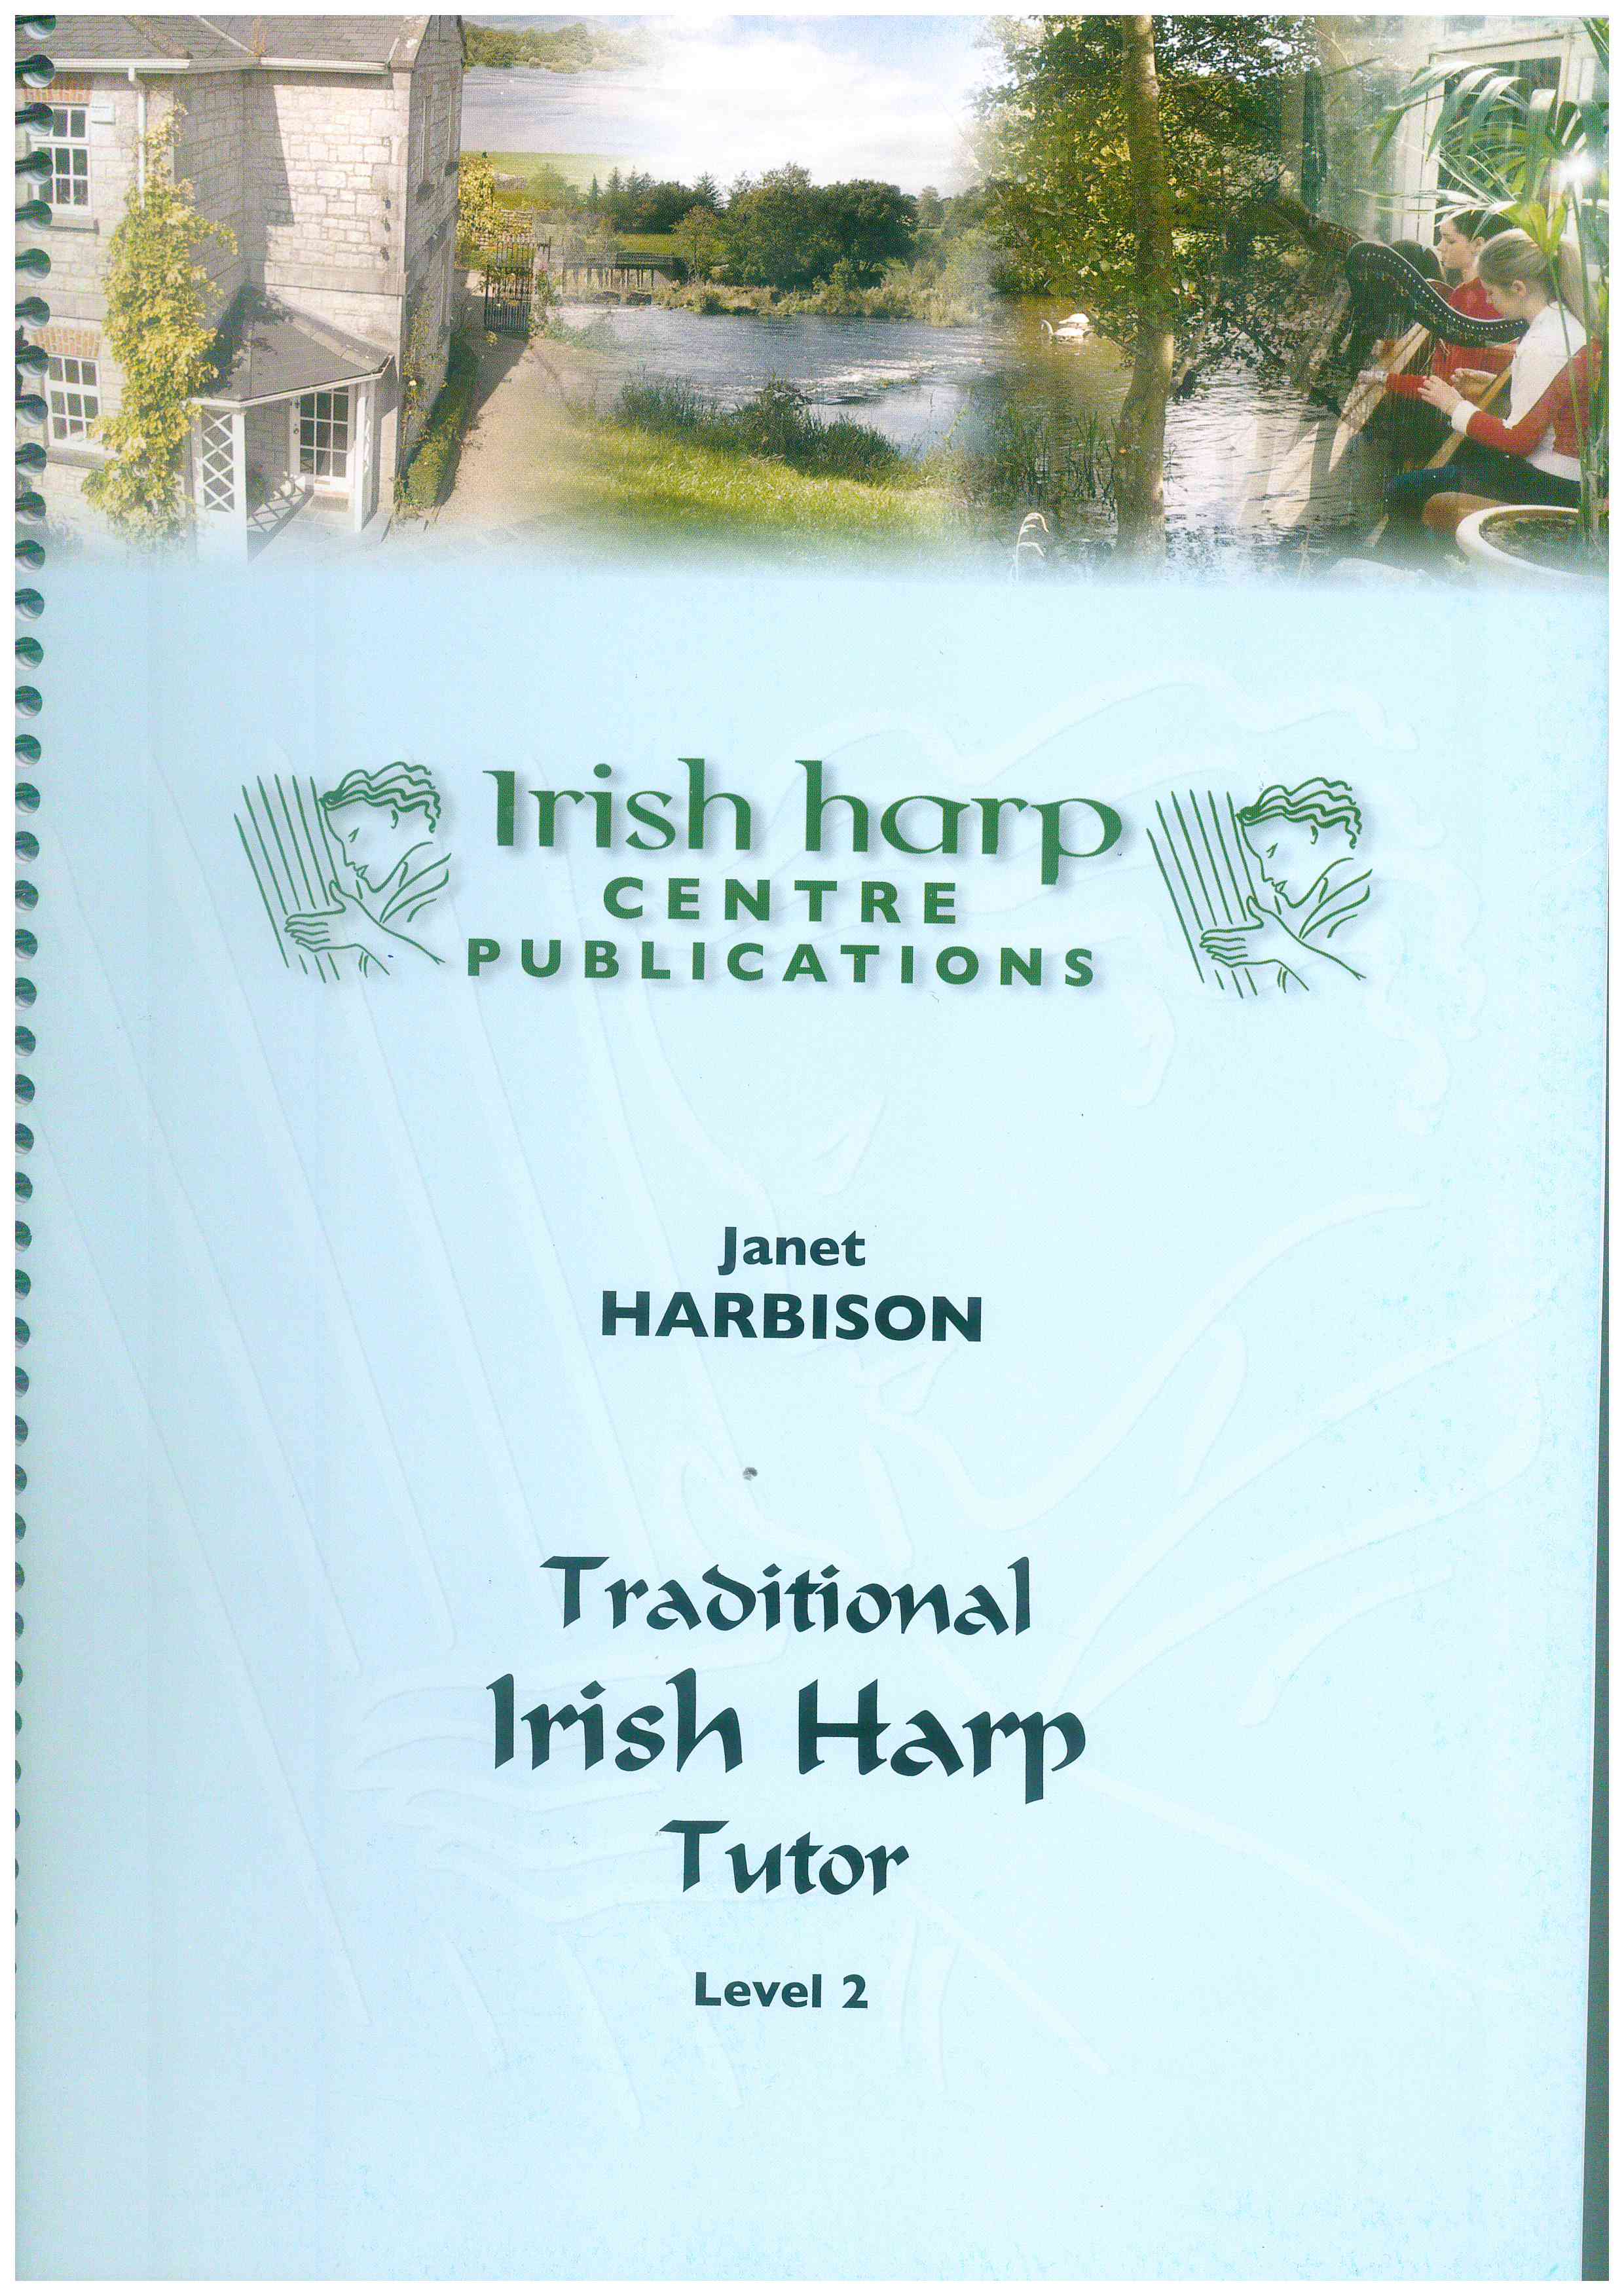 Traditional Irish Harp Tutor Level 2